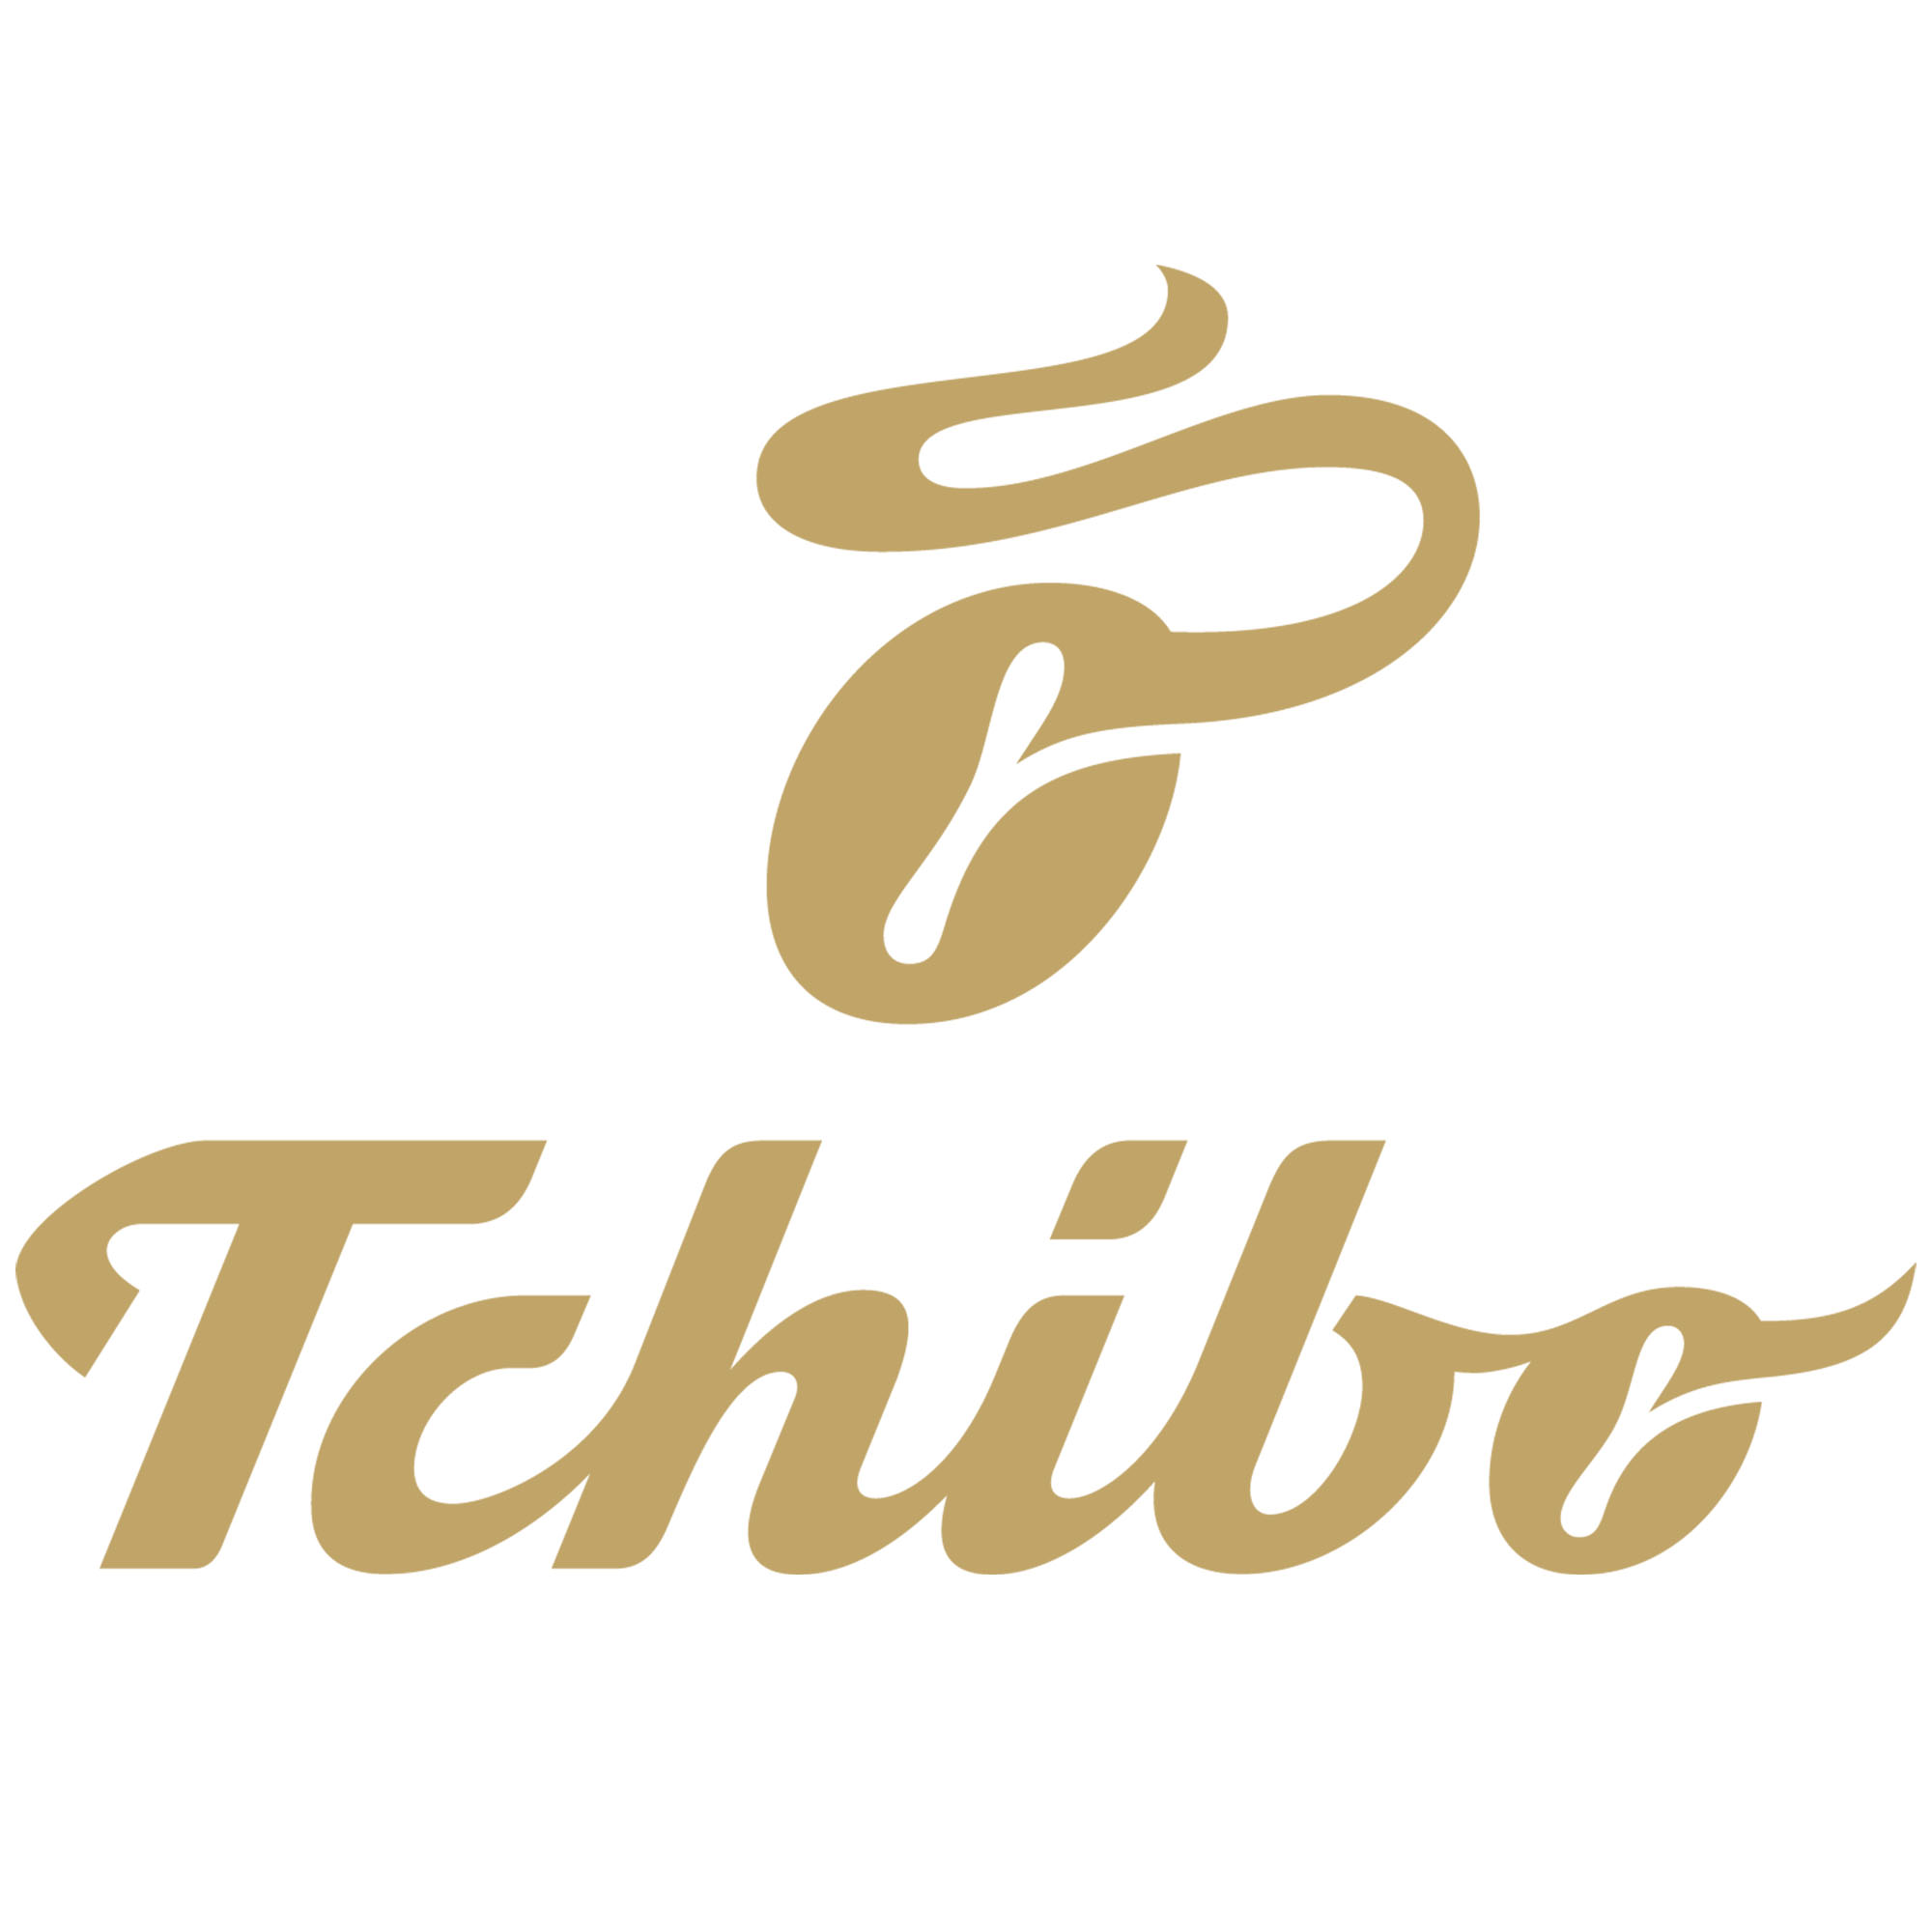 TCHIBO QBO Qbo Kapselsystem) Pack Enteta Kaffeekapseln (Tchibo 144 XXL St. 520912 Buna Caffè